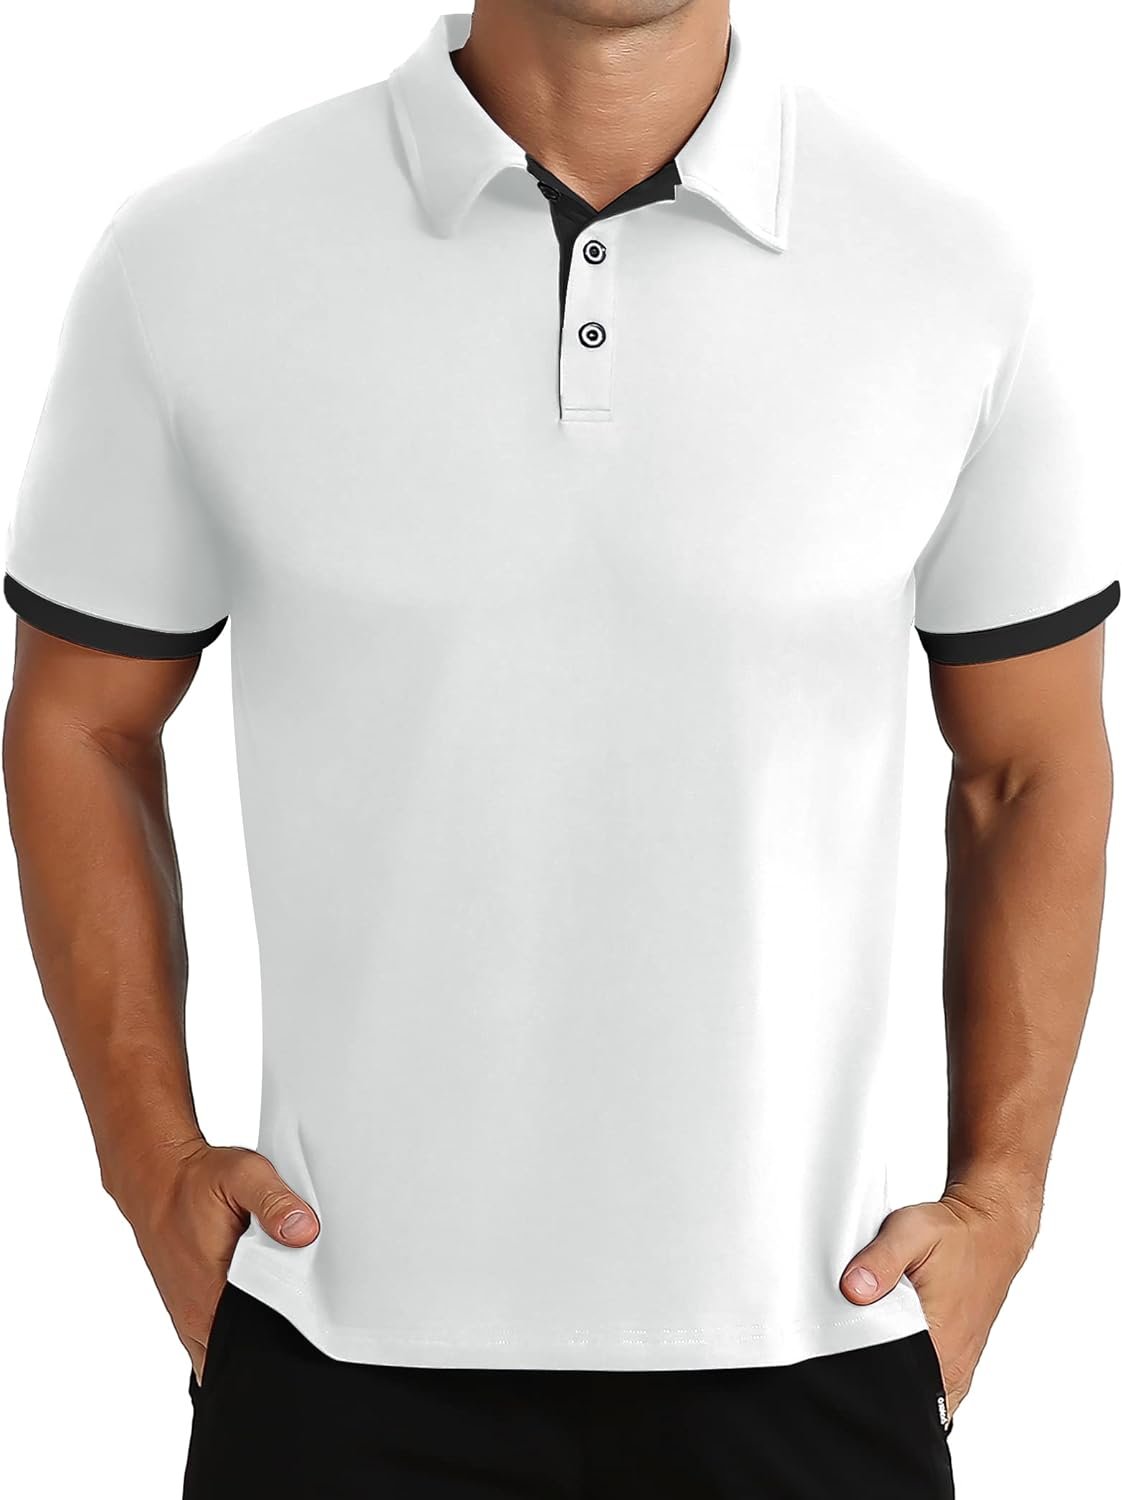 NITAGUT Mens ShortLong Sleeve Polo Shirt Casual Slim Fit Polo Tee Basic Designed Cotton Shirt for Man